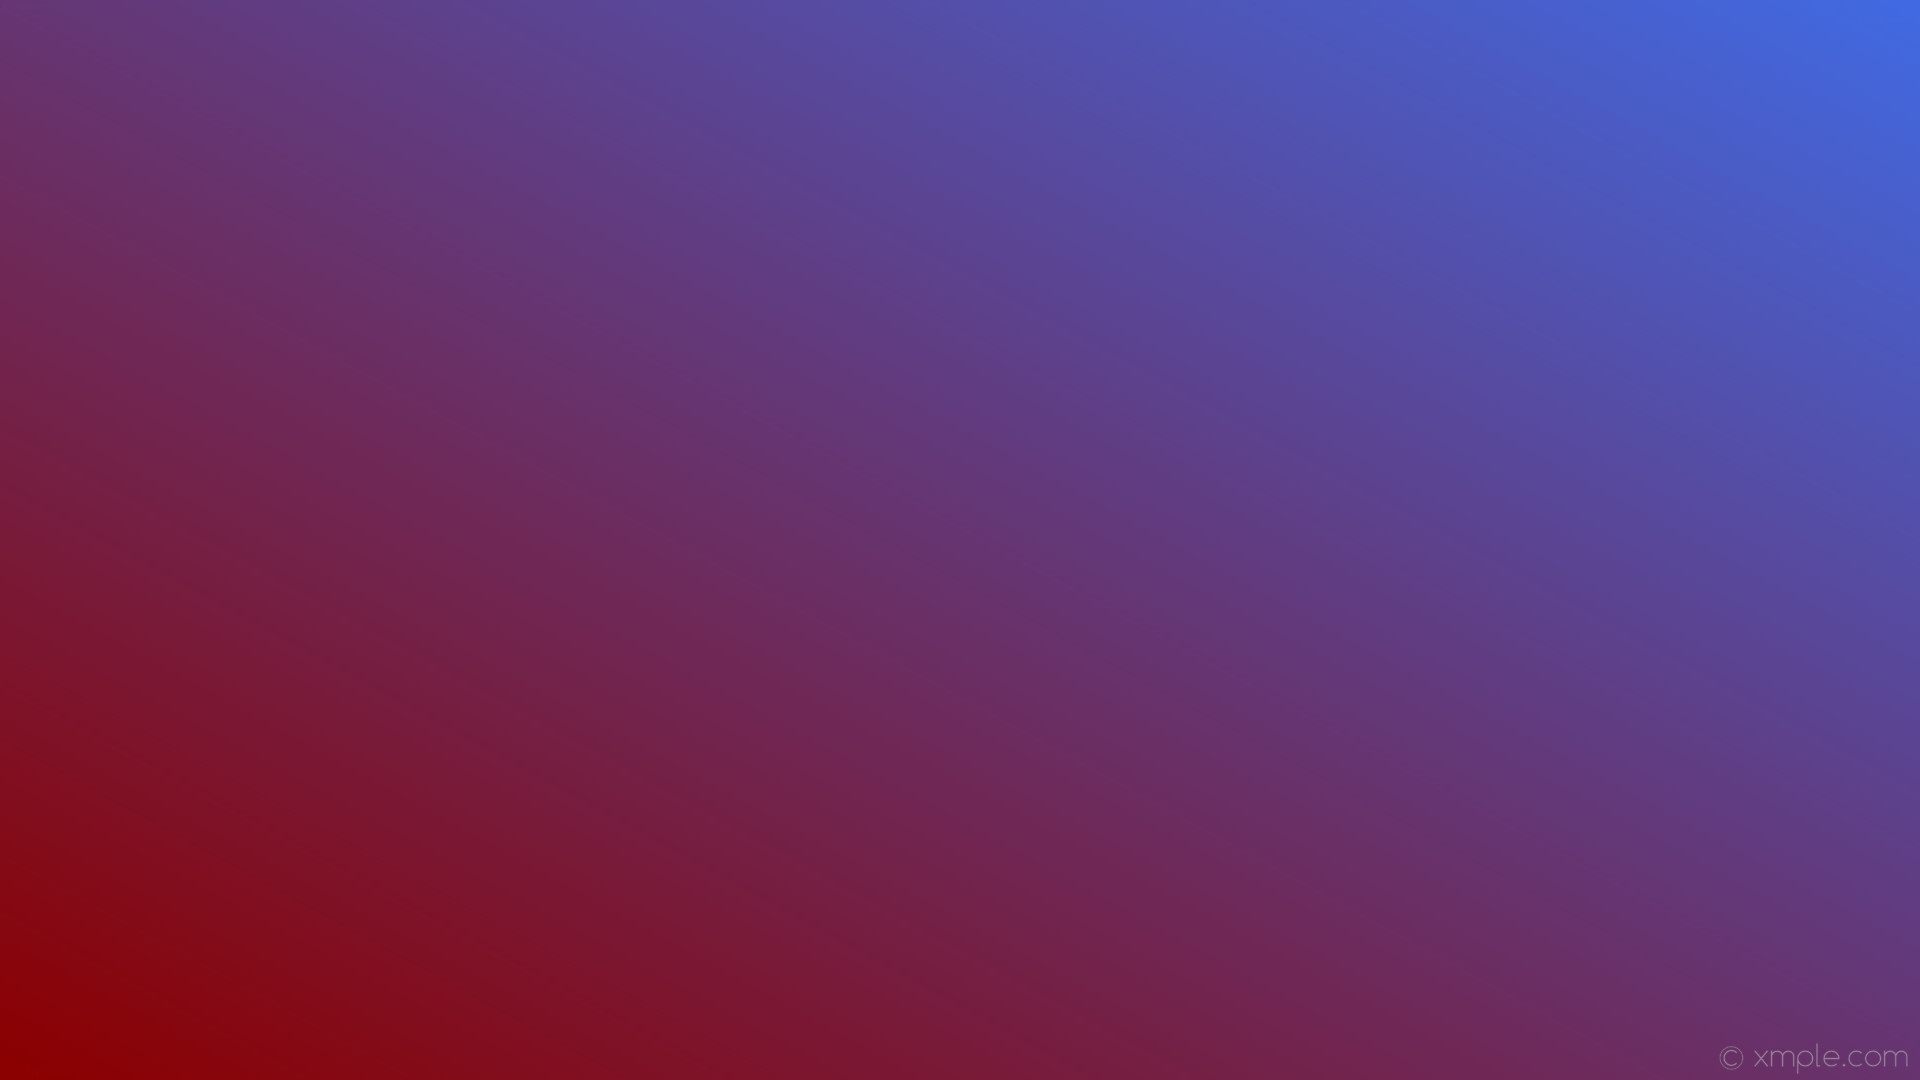 1920x1080 wallpaper gradient linear red blue dark red royal blue #8b0000 #4169e1 210Â°